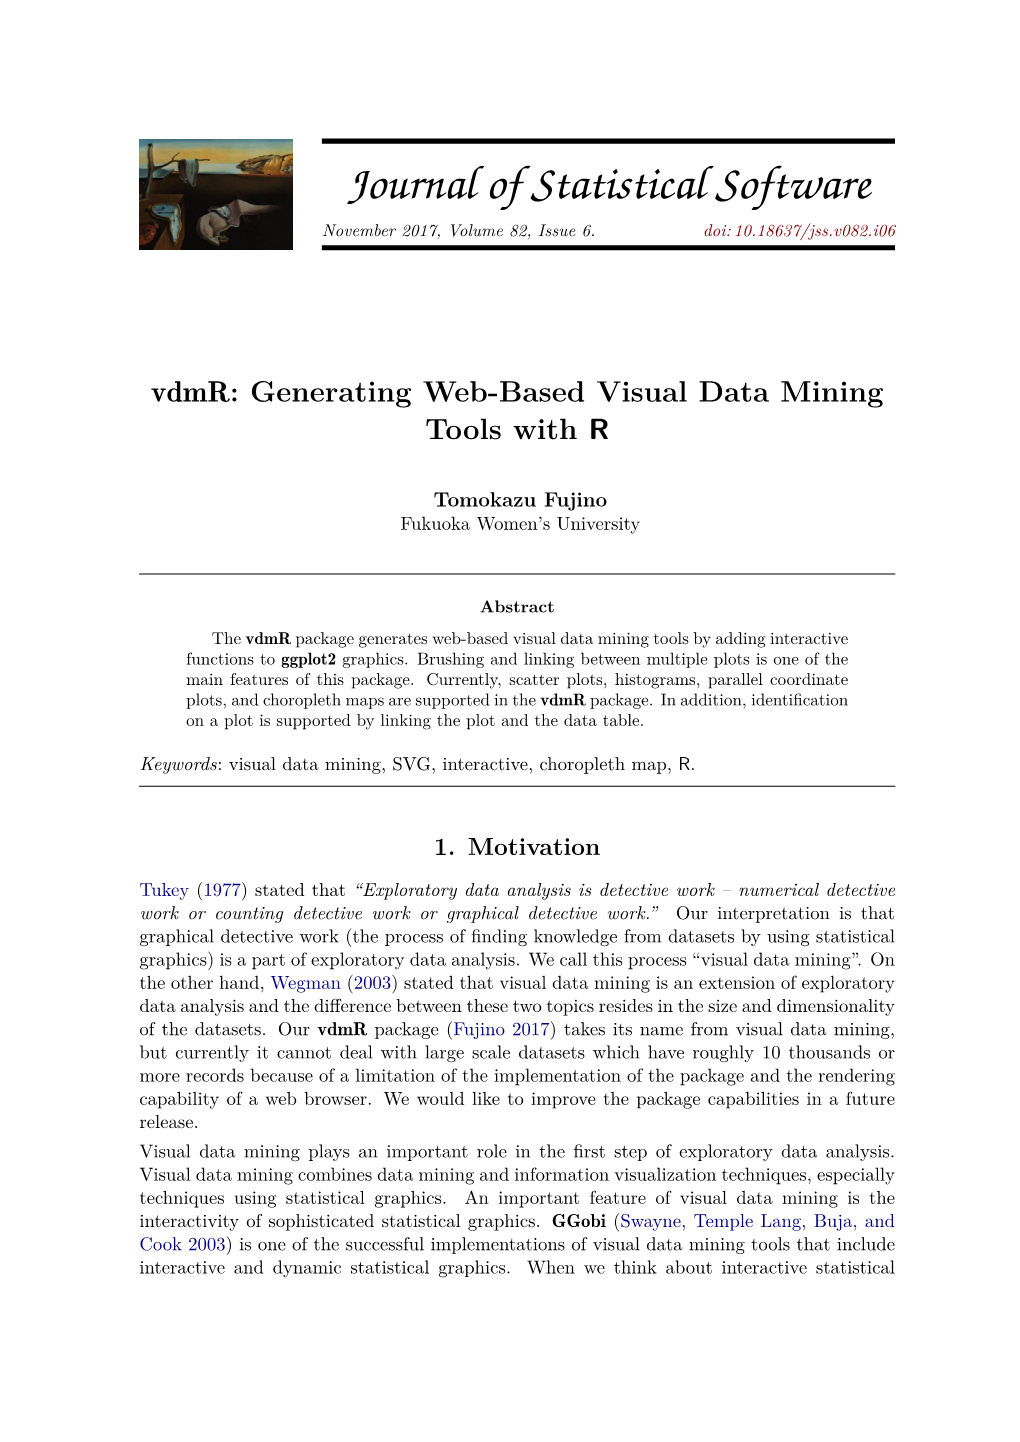 Vdmr: Generating Web-Based Visual Data Mining Tools with R